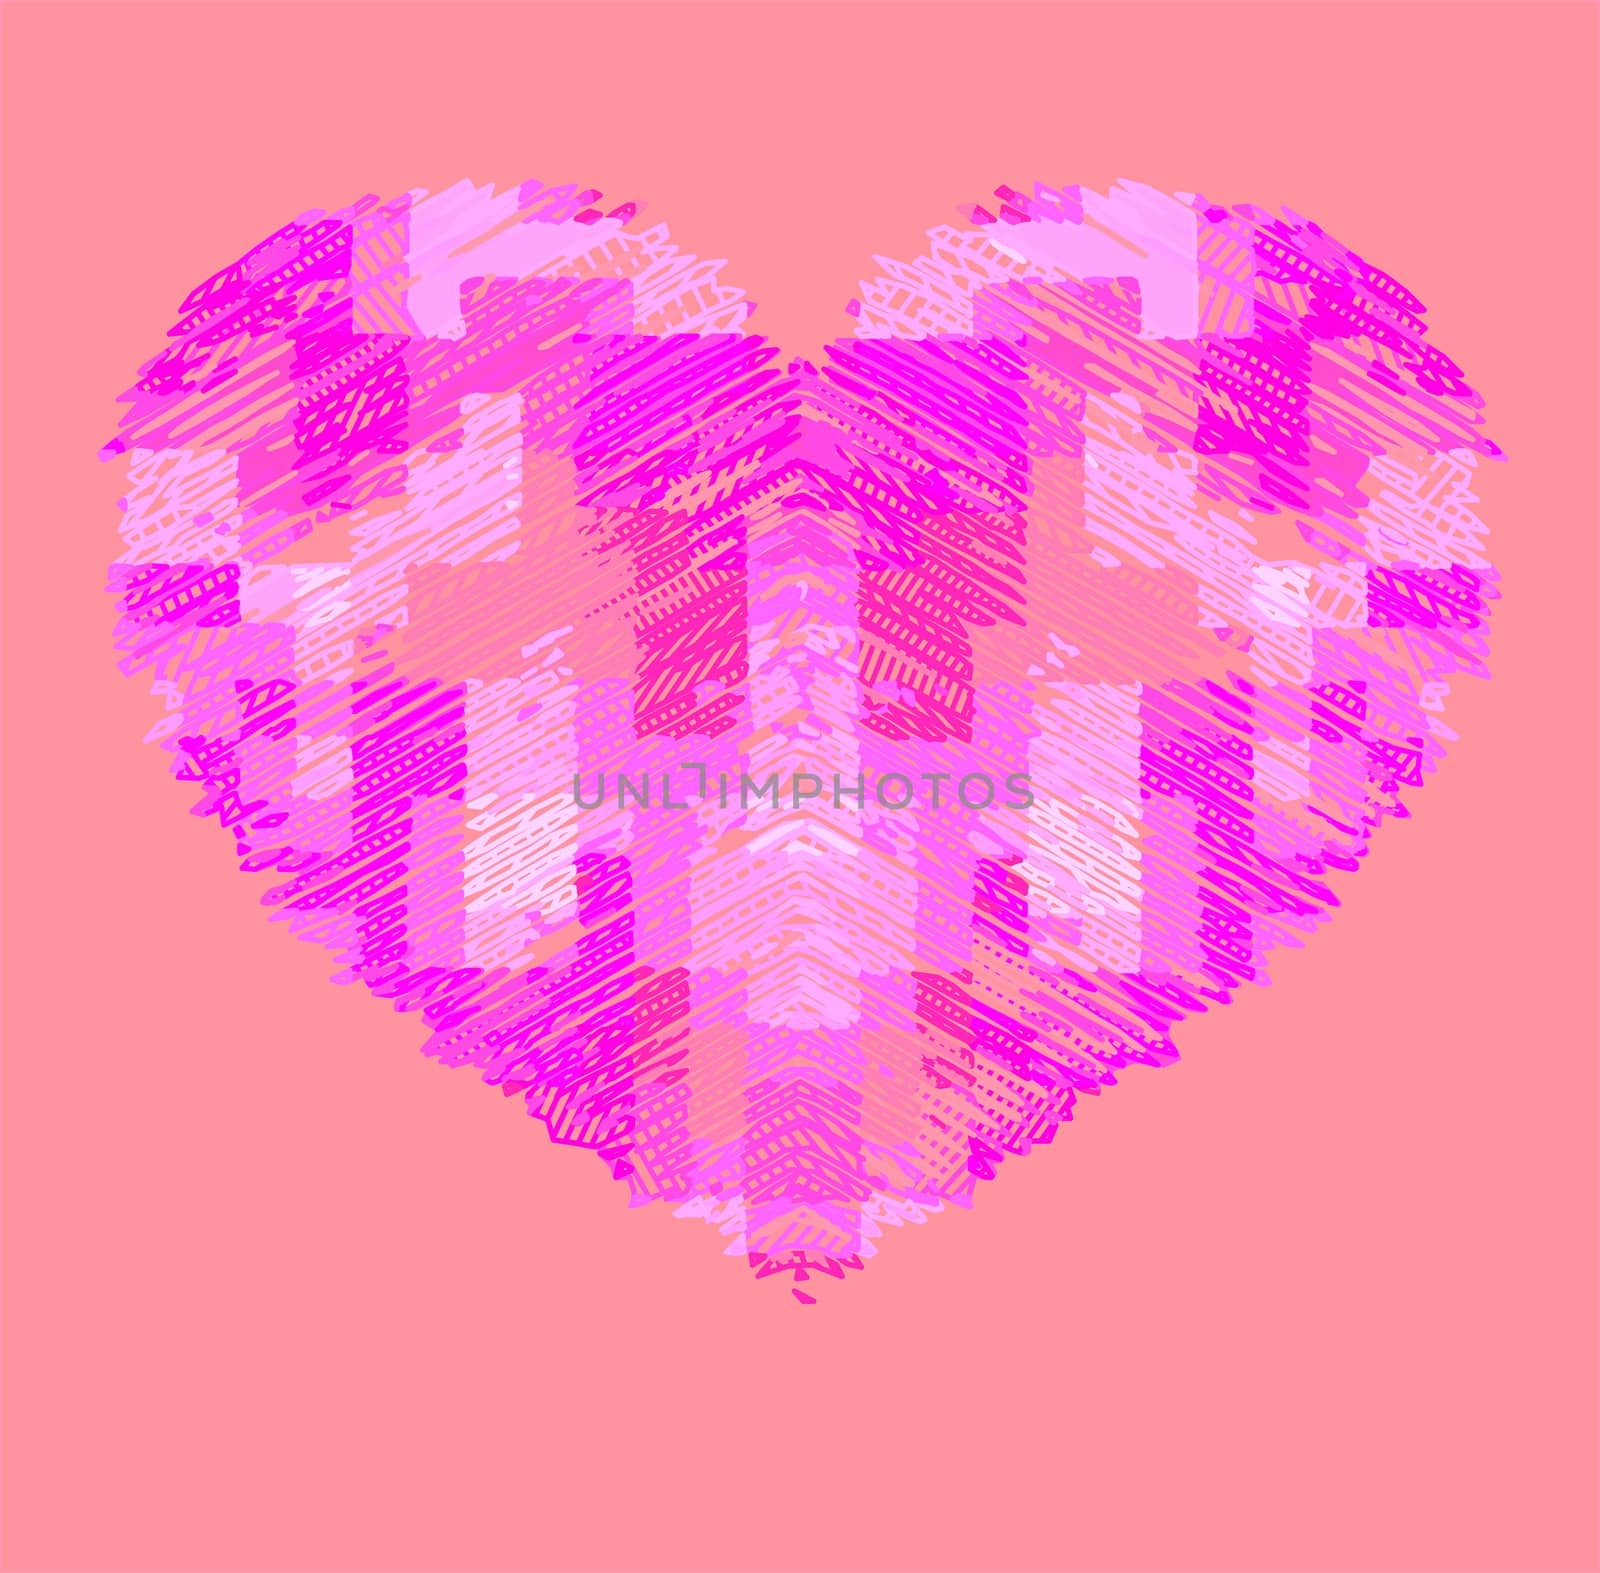 fresh drawing pink heart